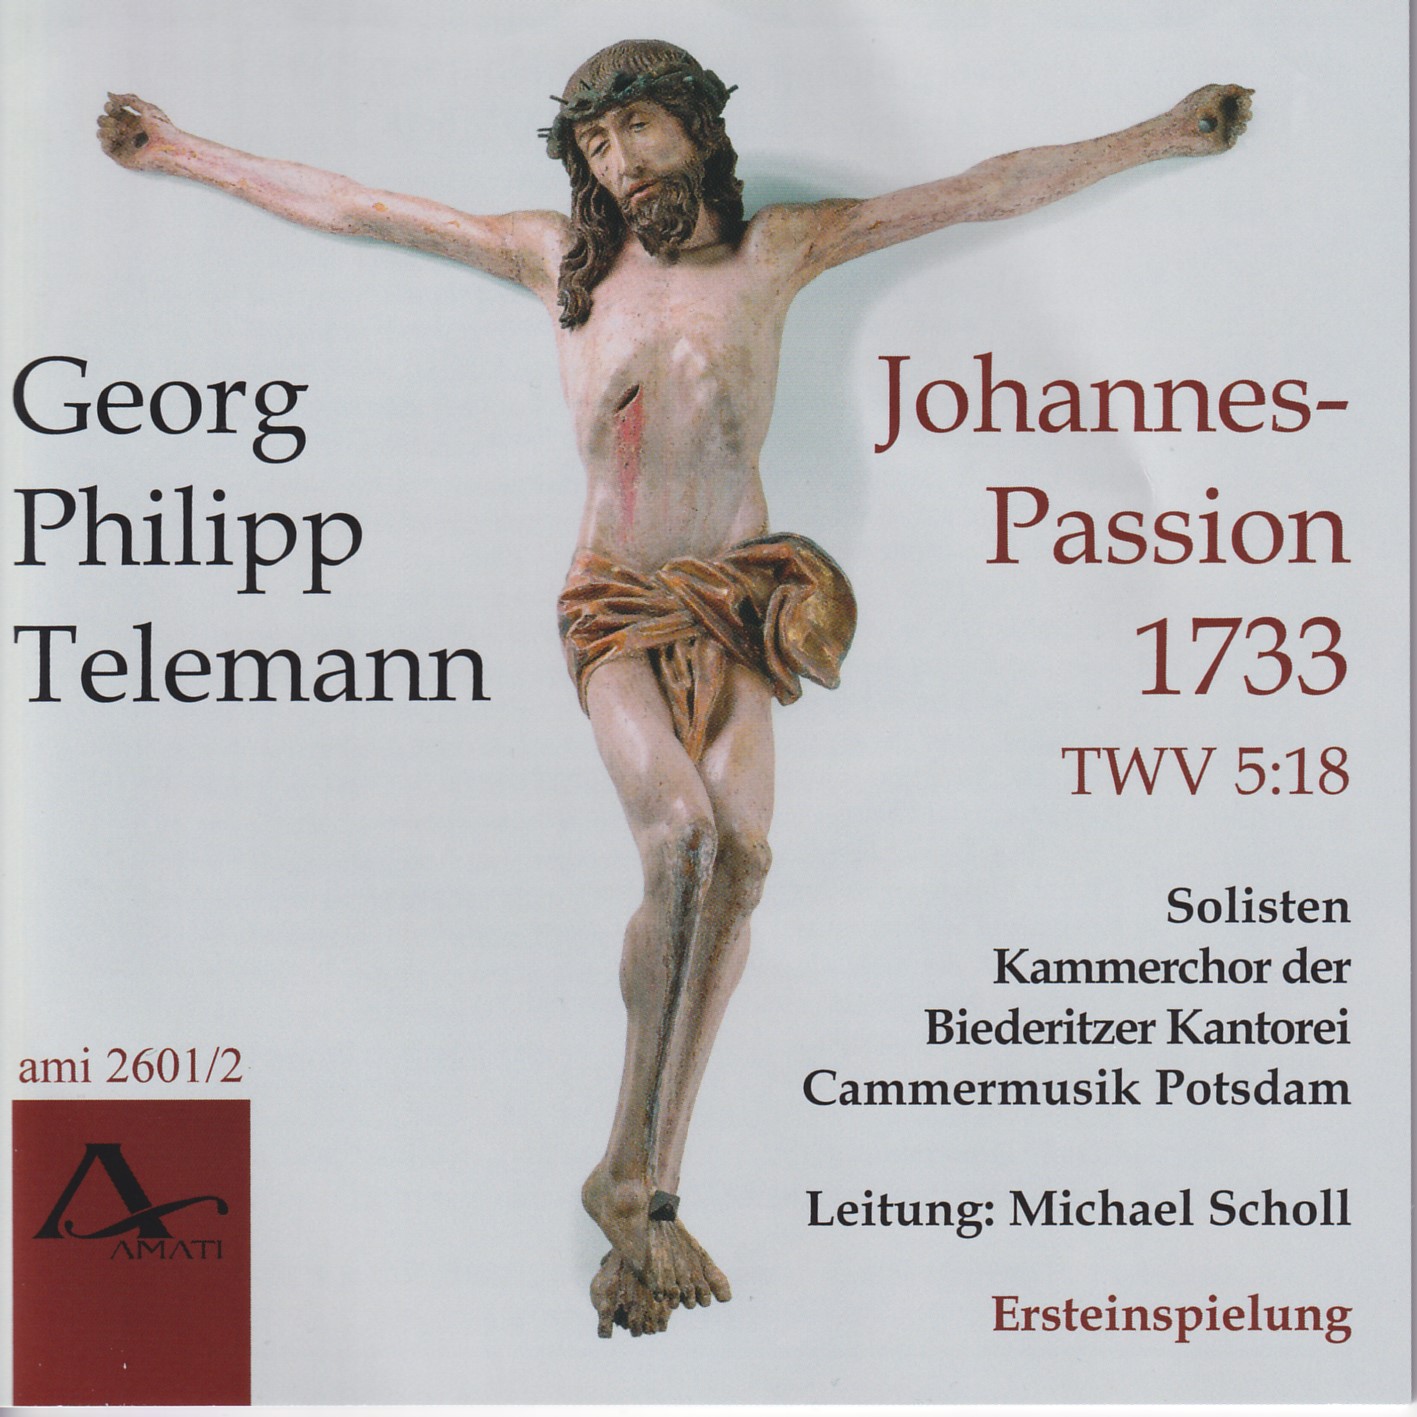 Georg Philipp Telemann - Johannes-Passion 1733 TWV 5:18